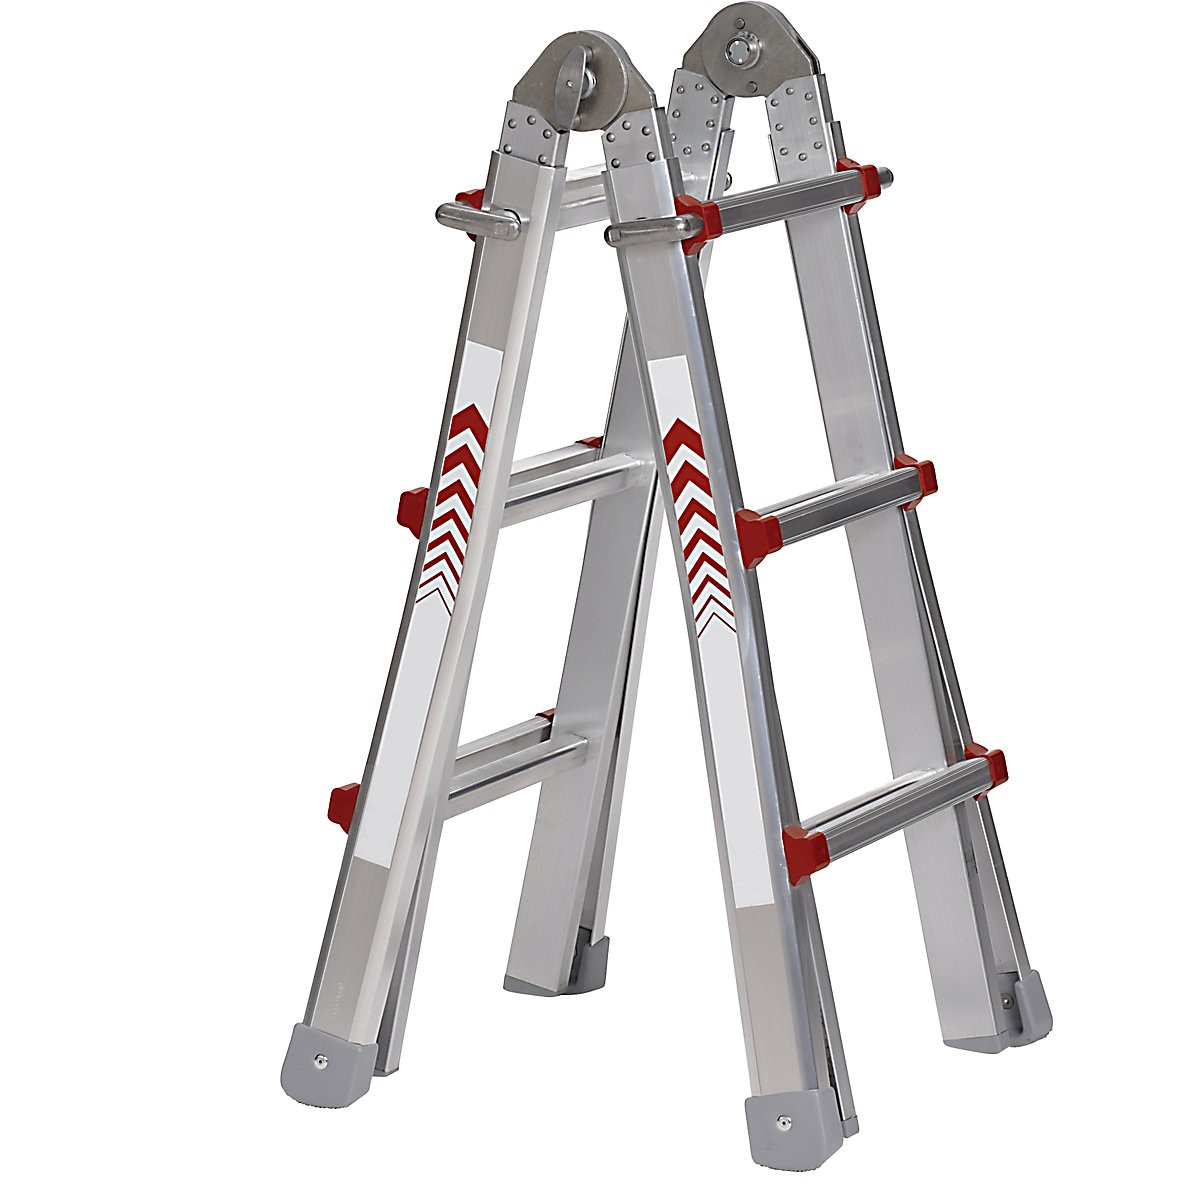 Details about   Telescopic Ladder Multi Purpose Ladder ausziehleiter Aluminium Ladder Stepladder ladder folding ladder r Ausziehleiter Aluleiter Stehleiter data-mtsrclang=en-US href=# onclick=return false; 							show original title 